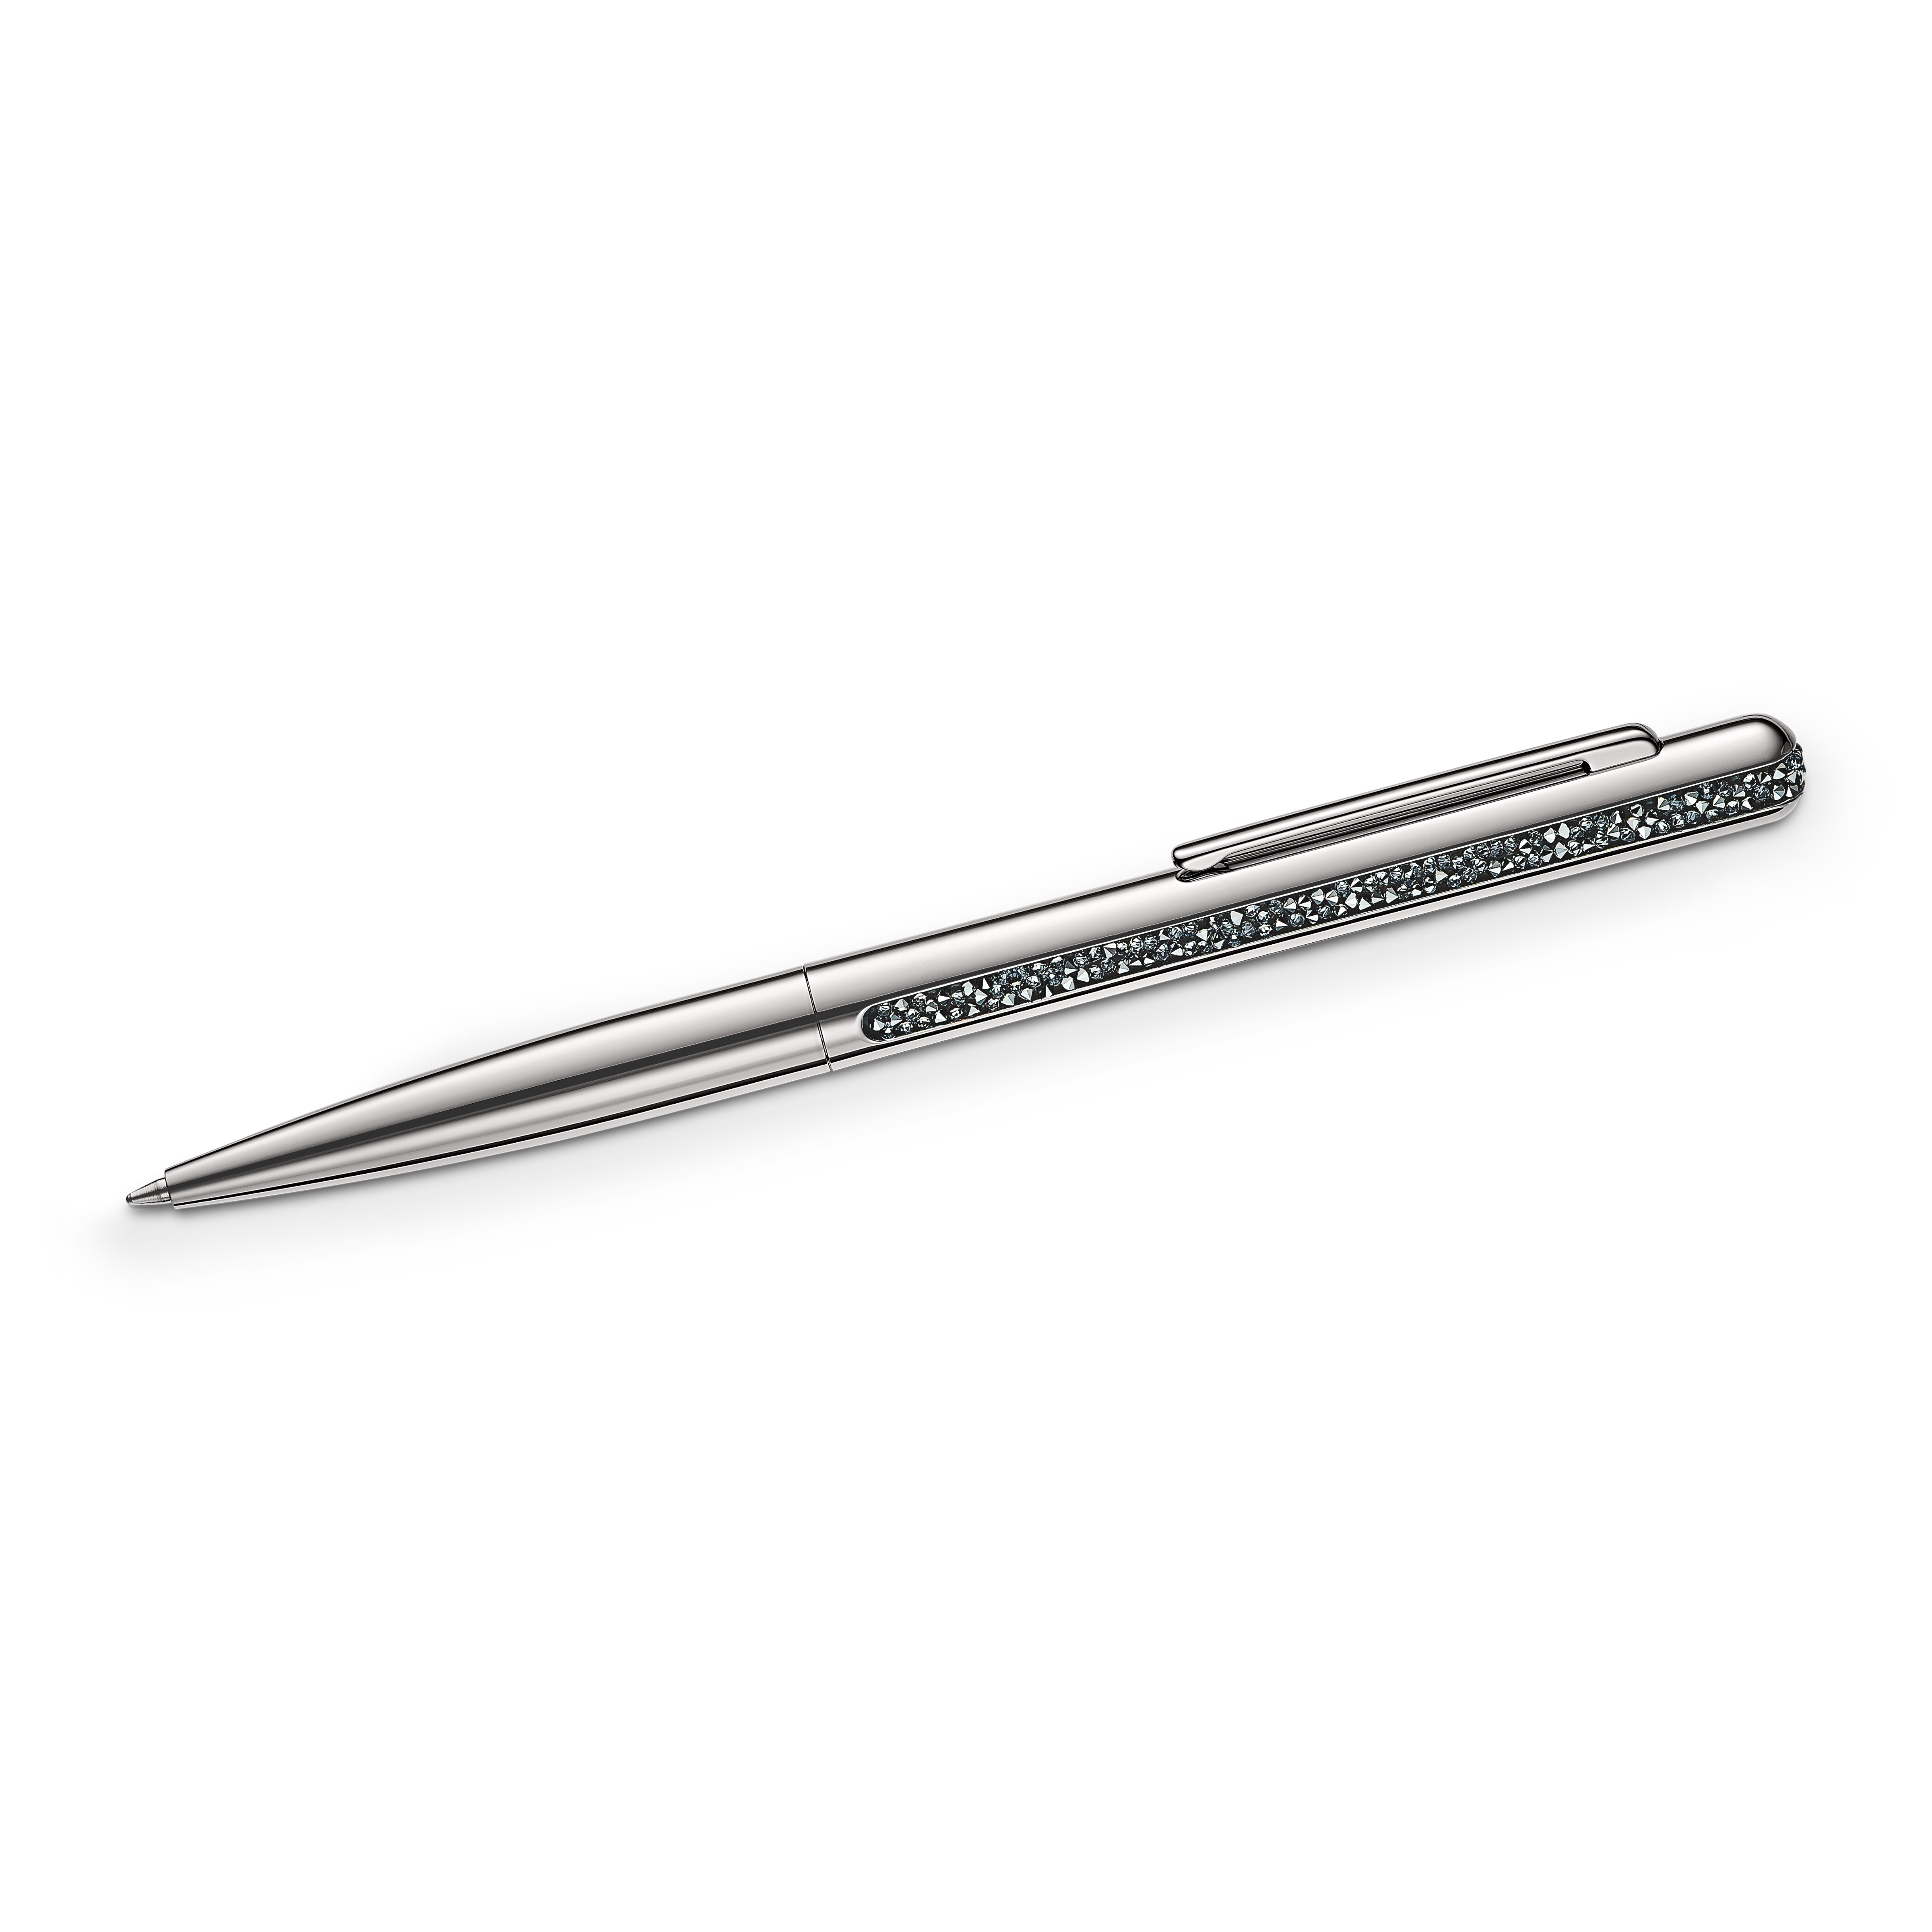 Crystal Shimmer ballpoint pen, Silver tone, Chrome plated by SWAROVSKI